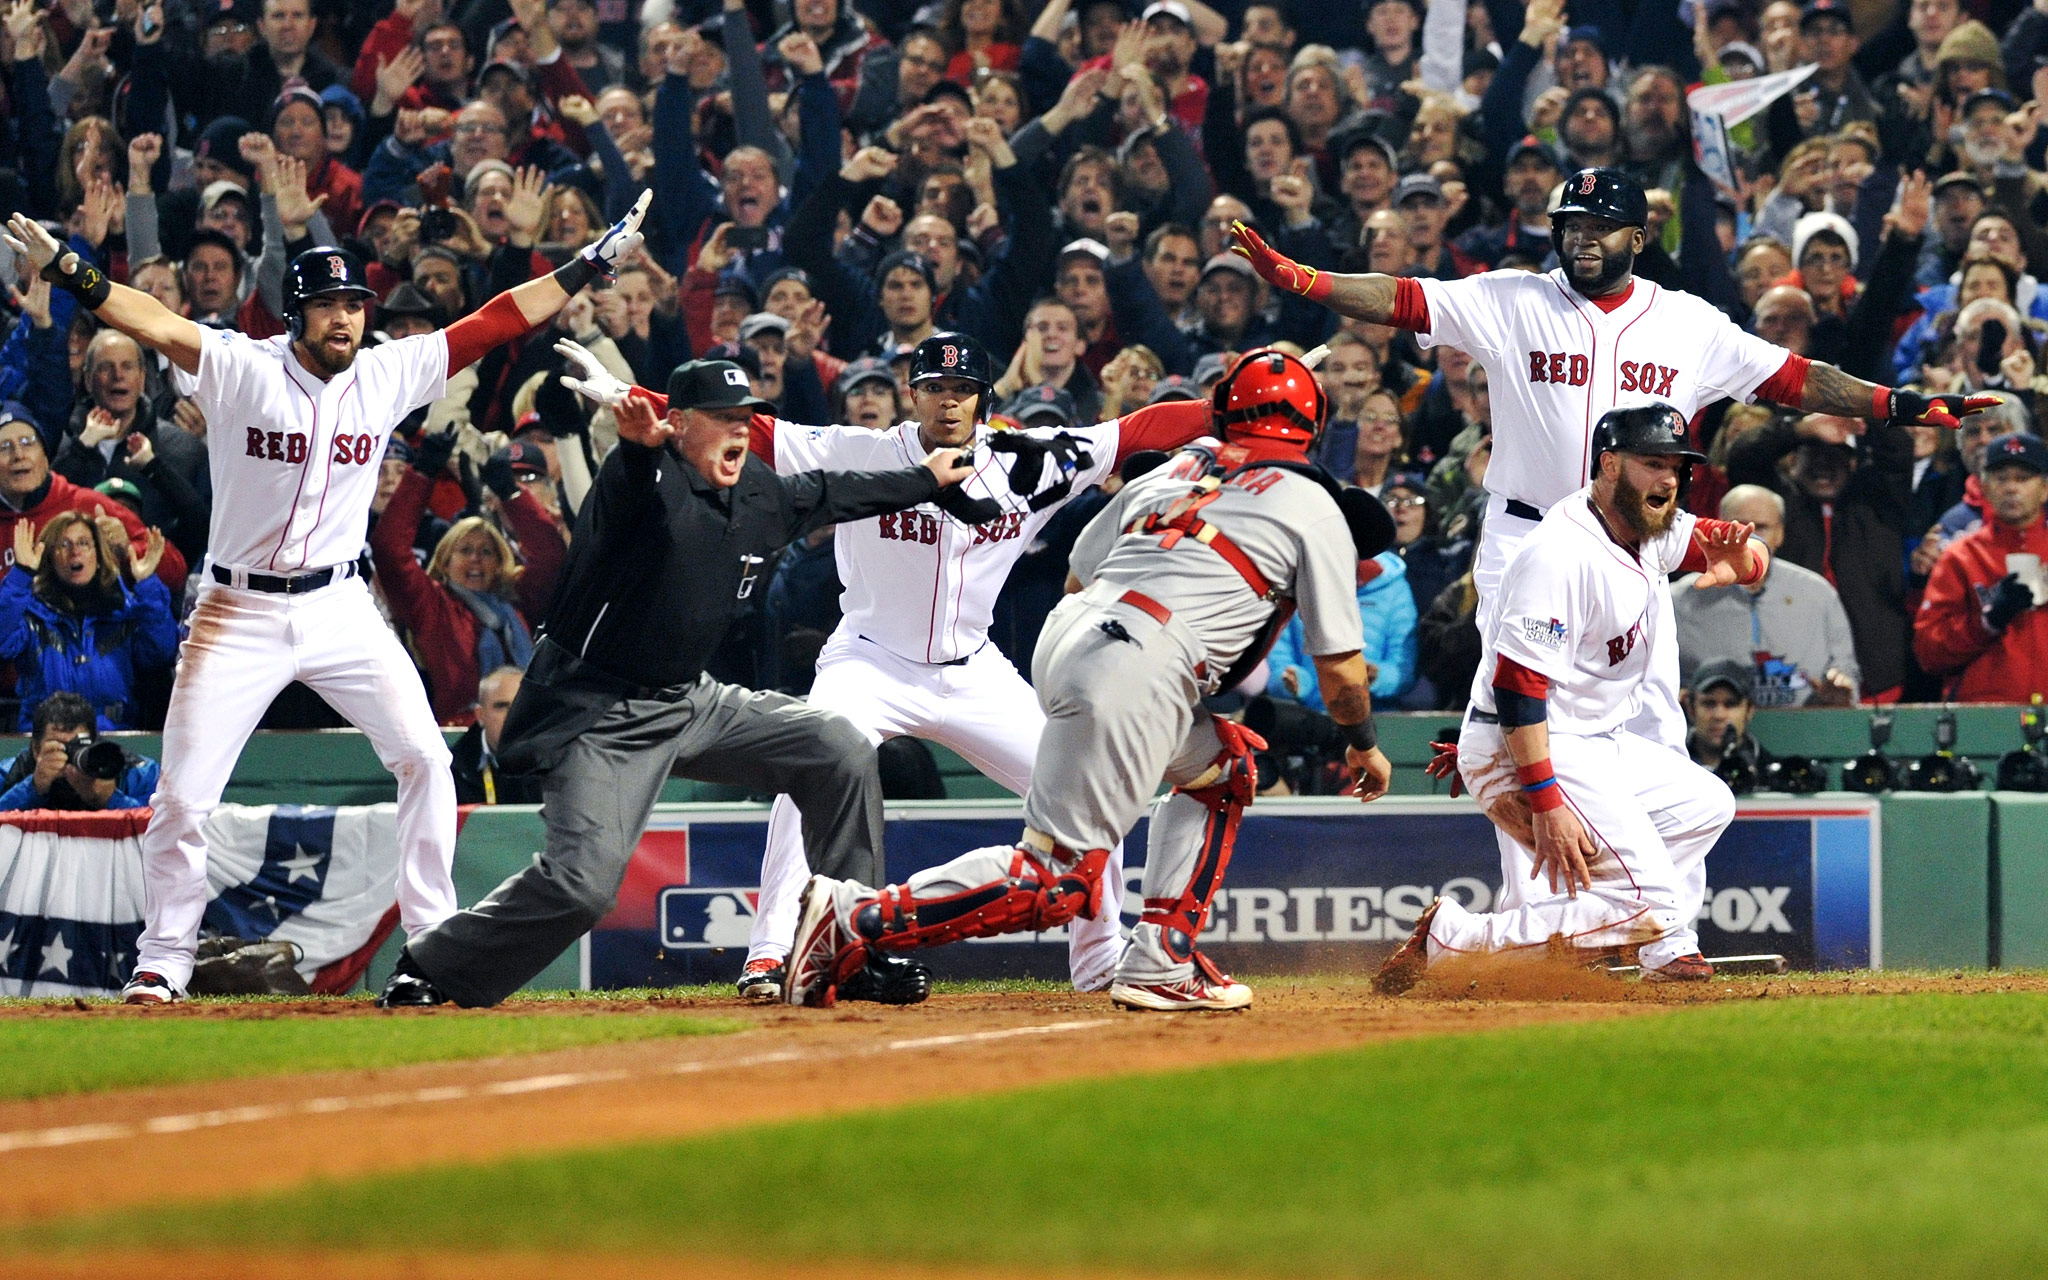 2013 Red Sox World Series Celebration - ESPN